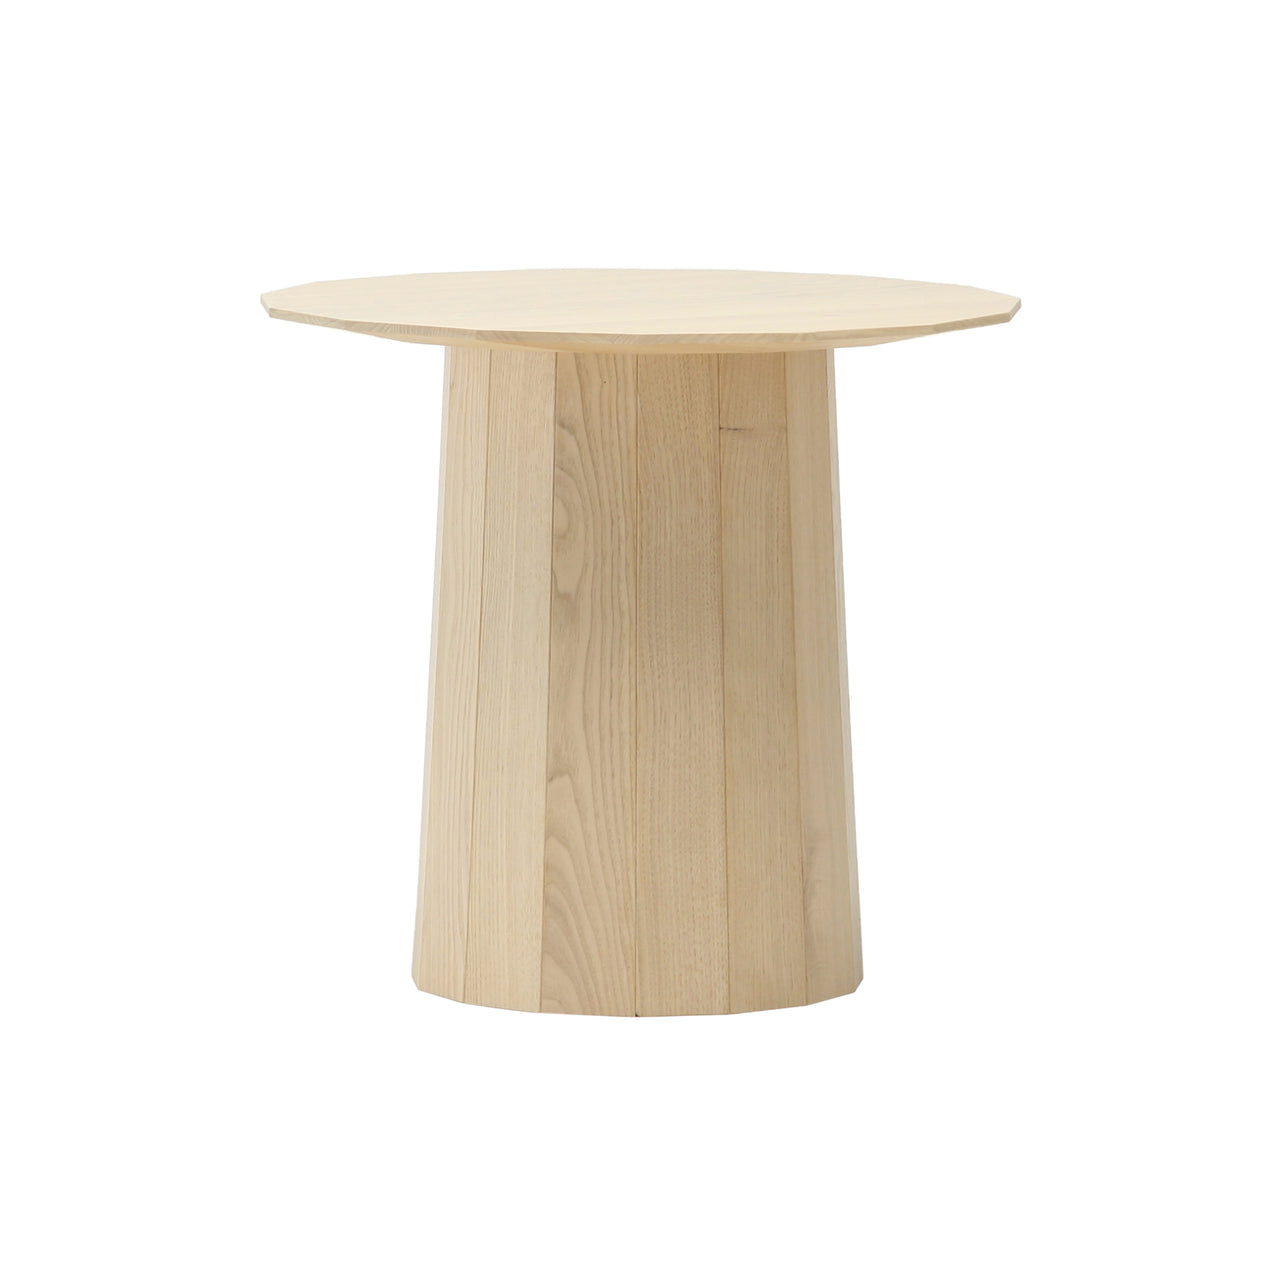 Colour Wood Plain Tables: Small - 19.9